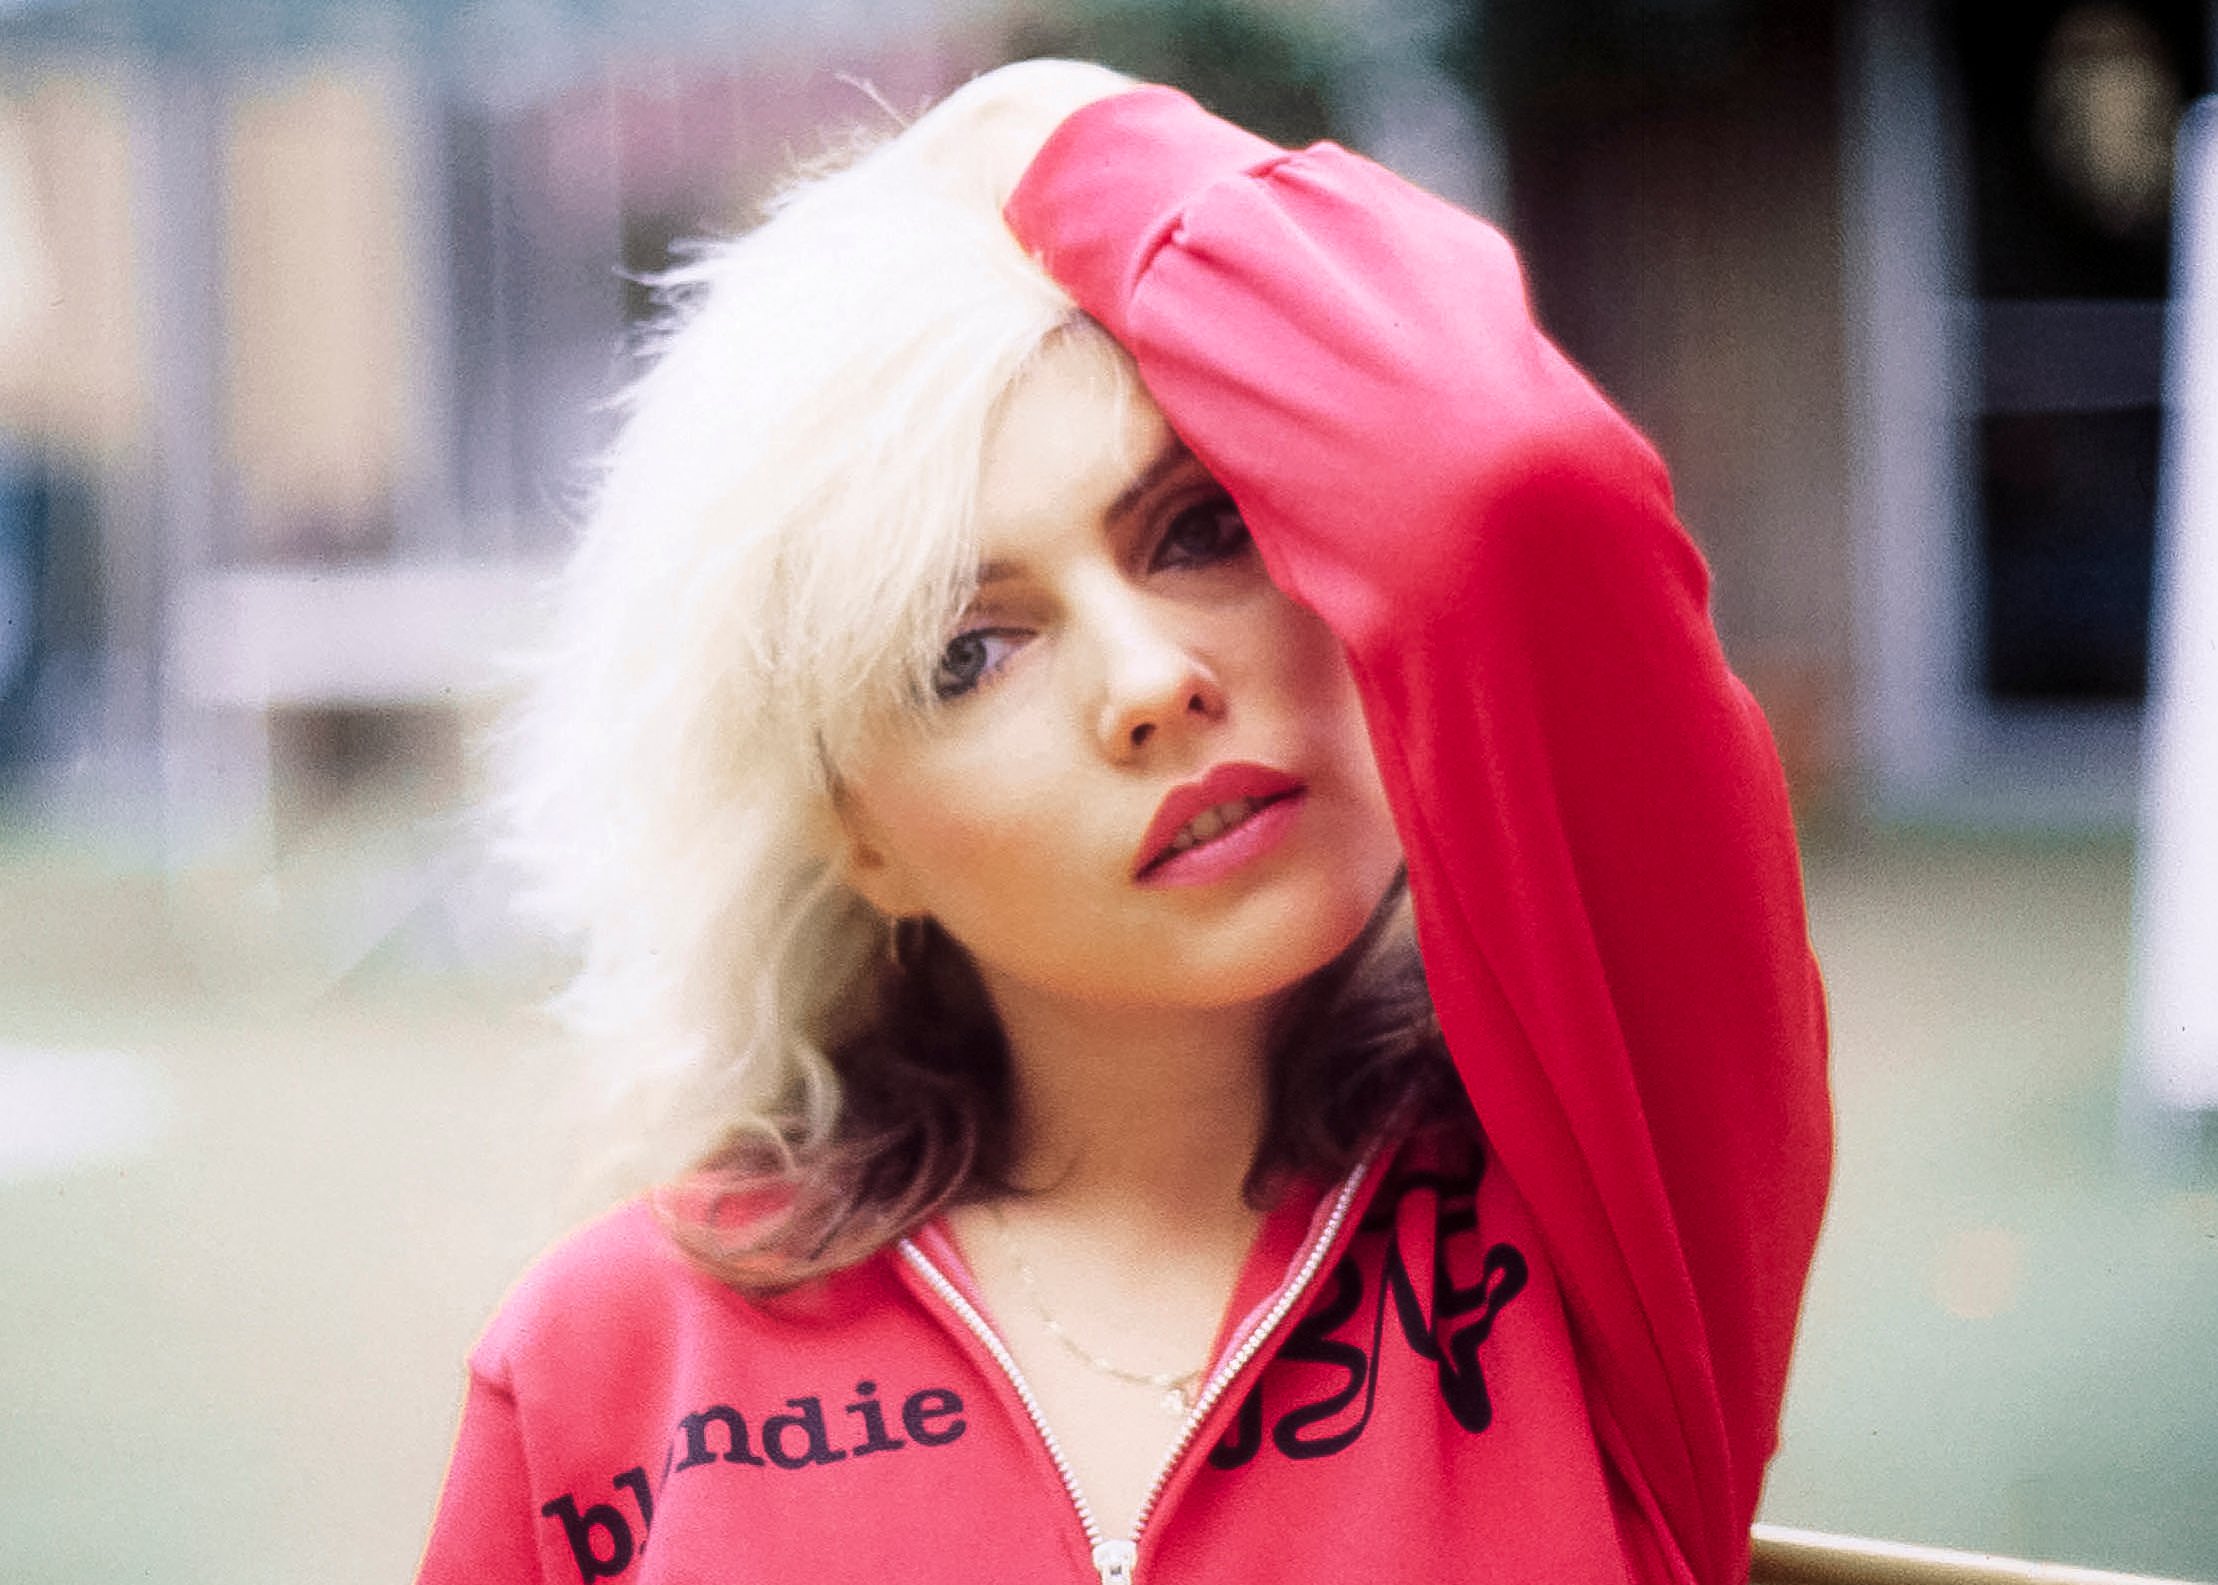 Debbie Harry of Blondie wearing pink and running her fingers through her hair